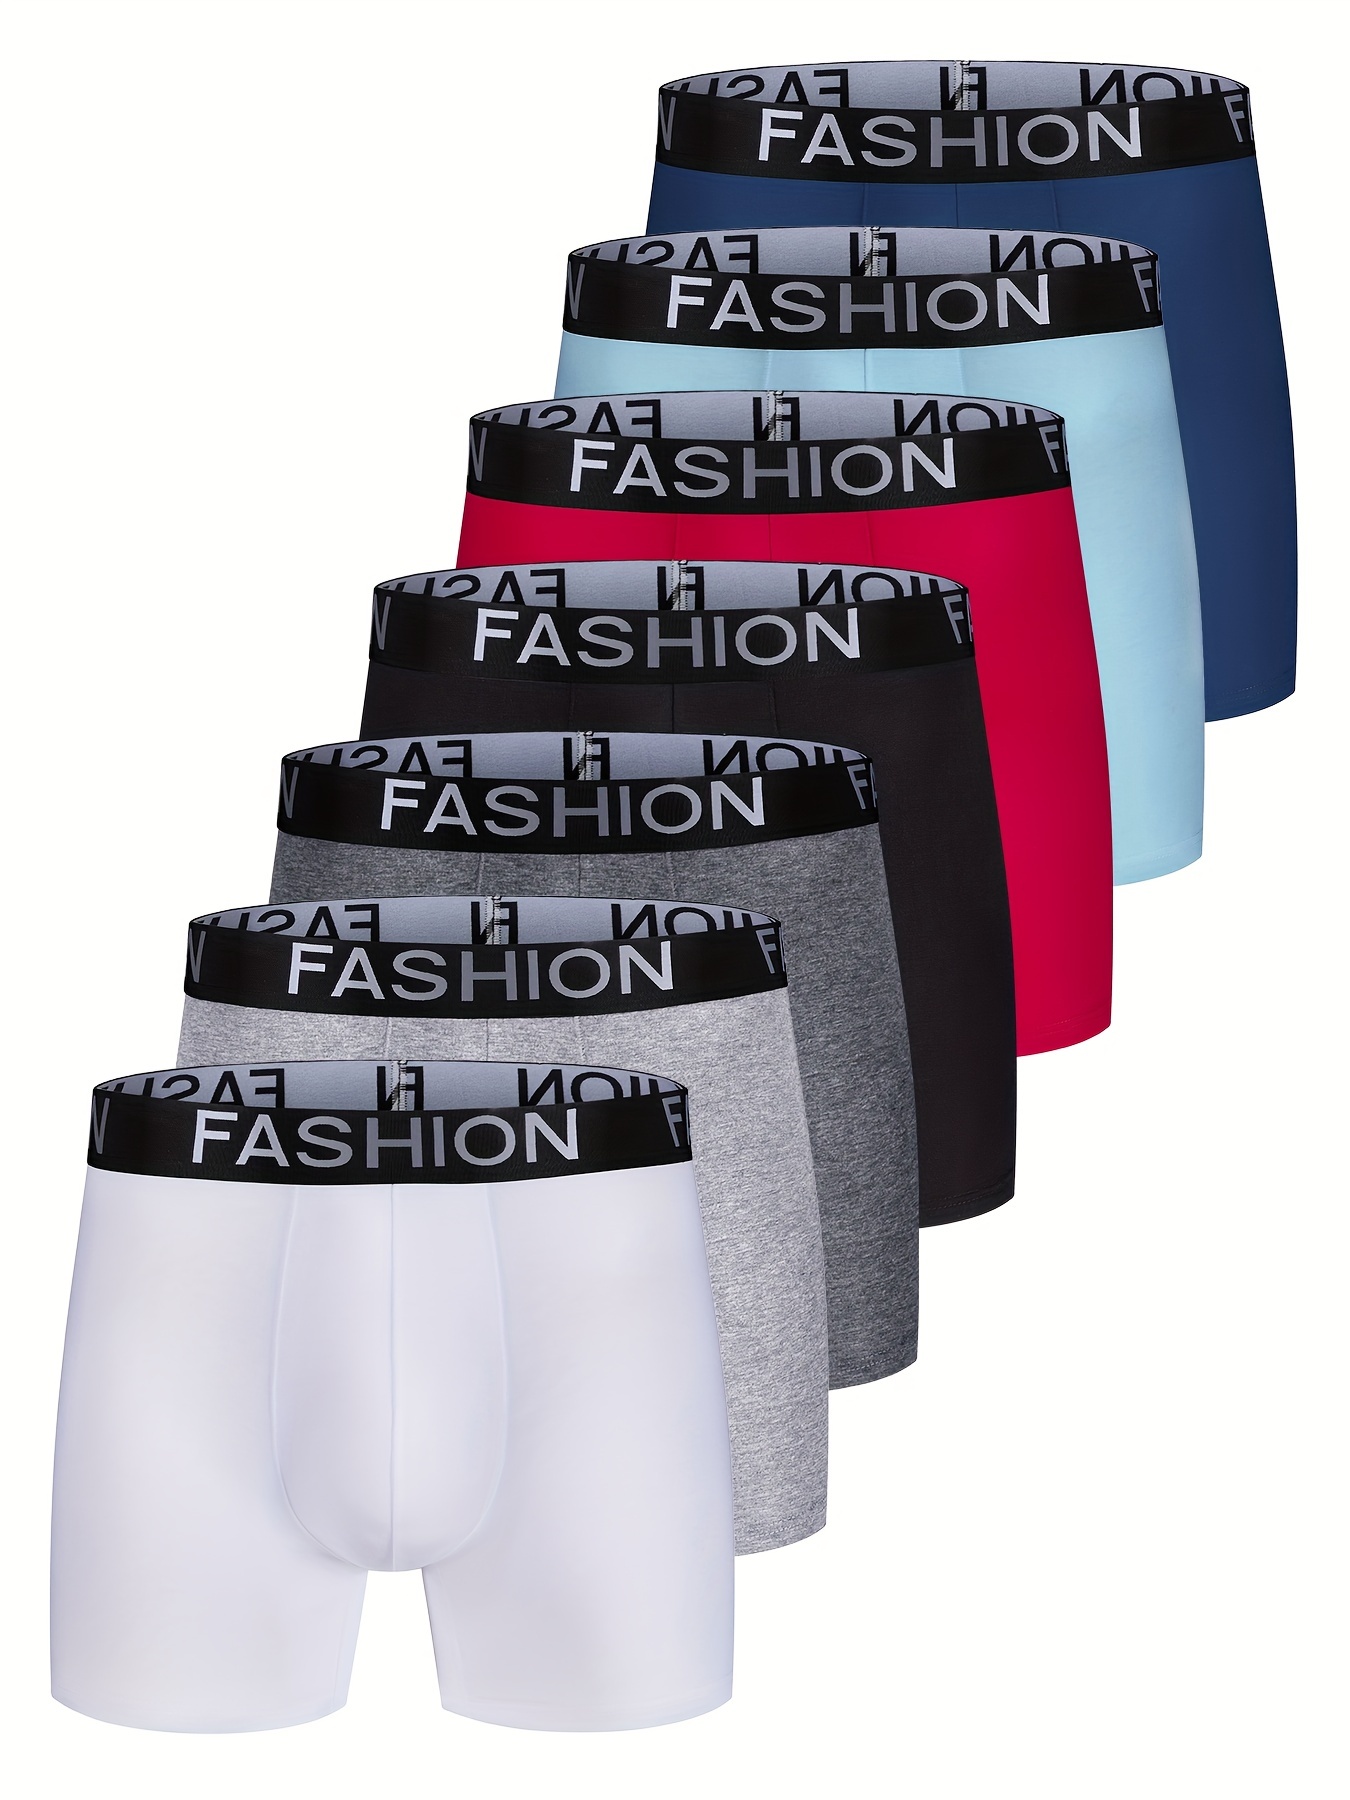 3pcs Men's Camo Printed Bamboo Breathable Boxer Briefs Underwear